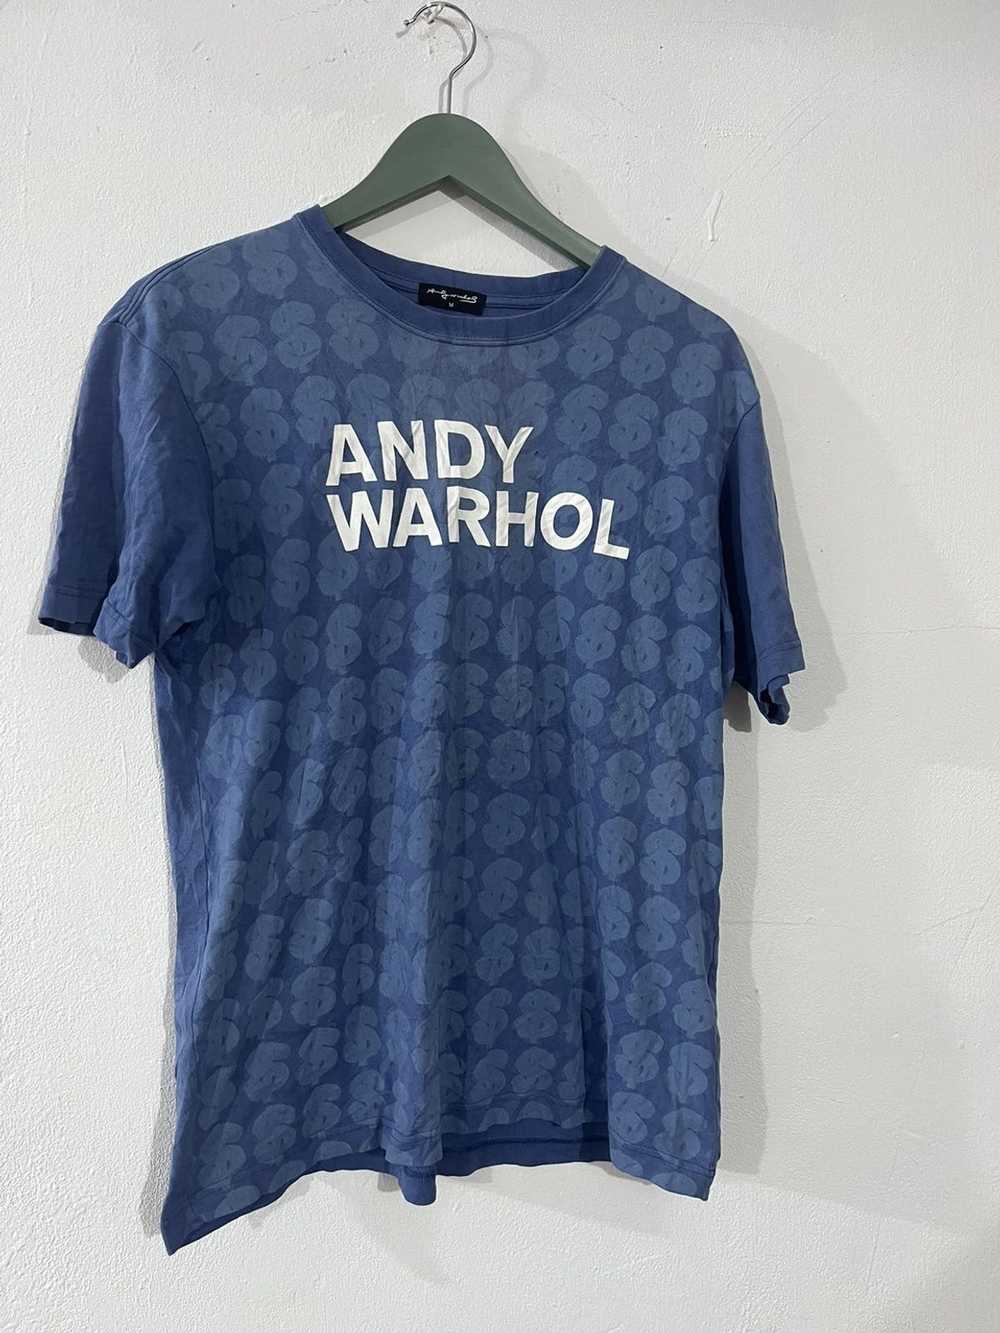 Andy Warhol × Japanese Brand × Uniqlo Andy warhol - image 1